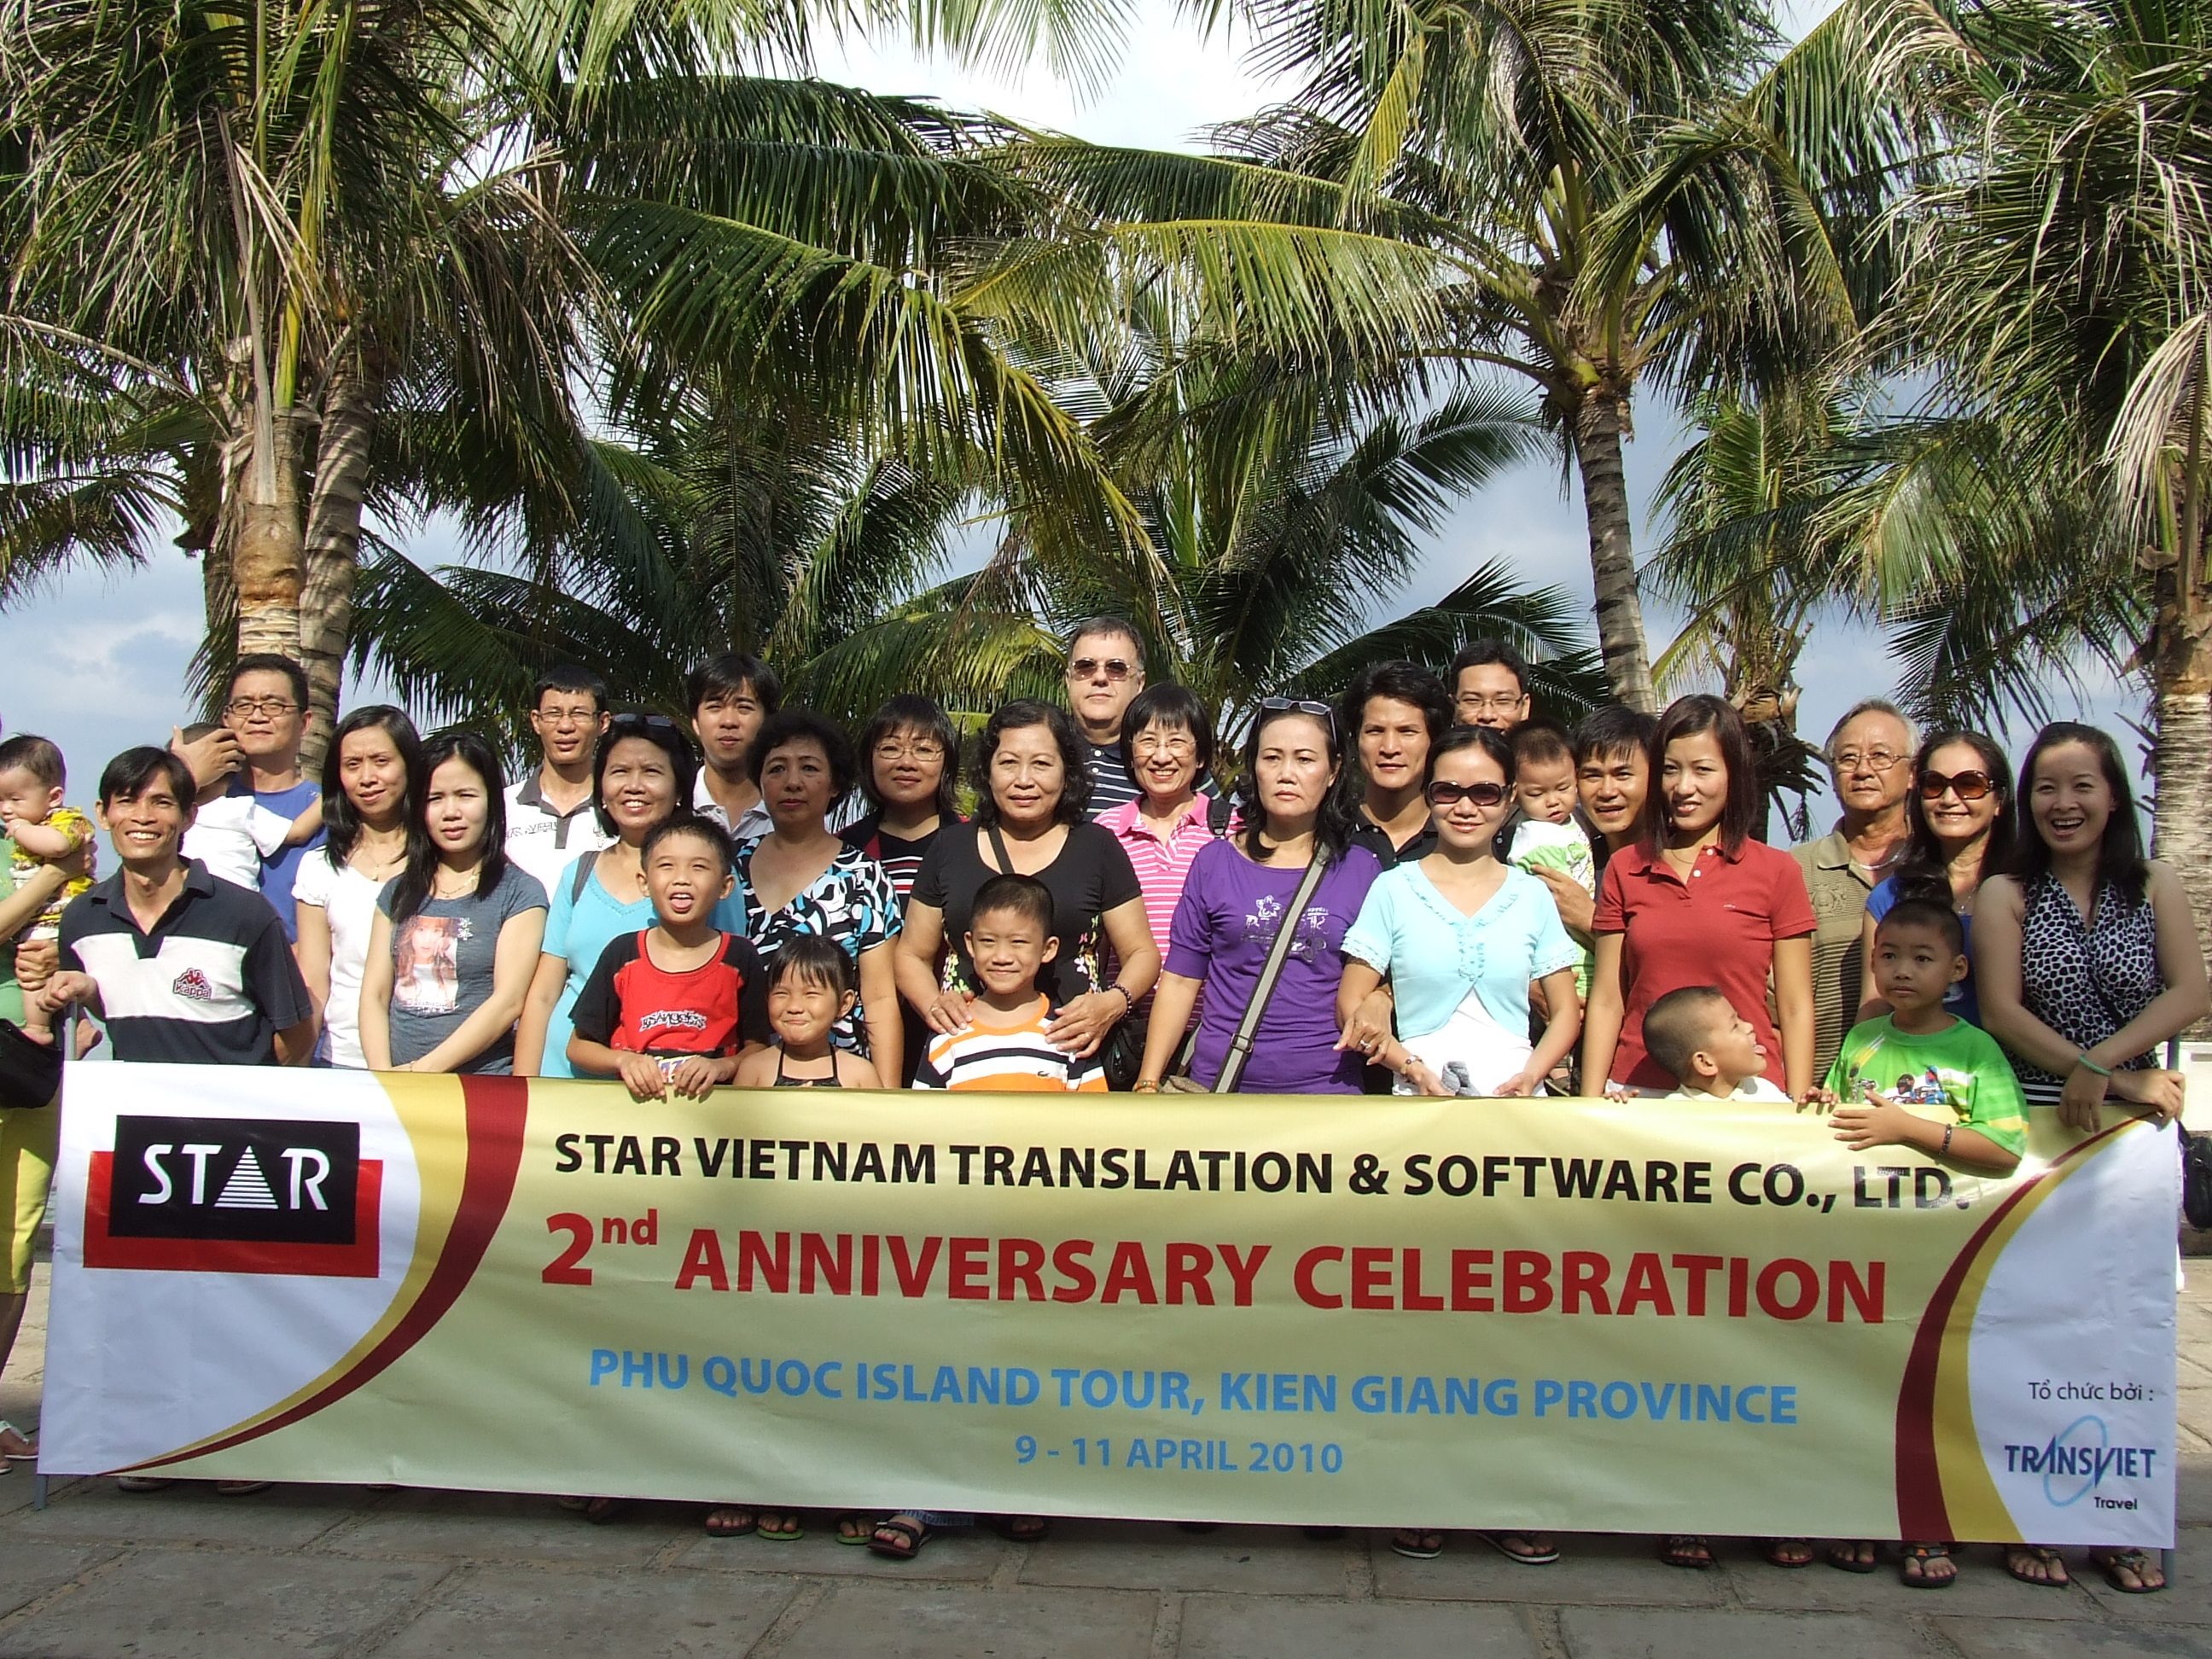 STAR Vietnam celebrates the 2nd anniversary of establishment – a tour of Phu Quoc Island (09 – 04.11.2010)